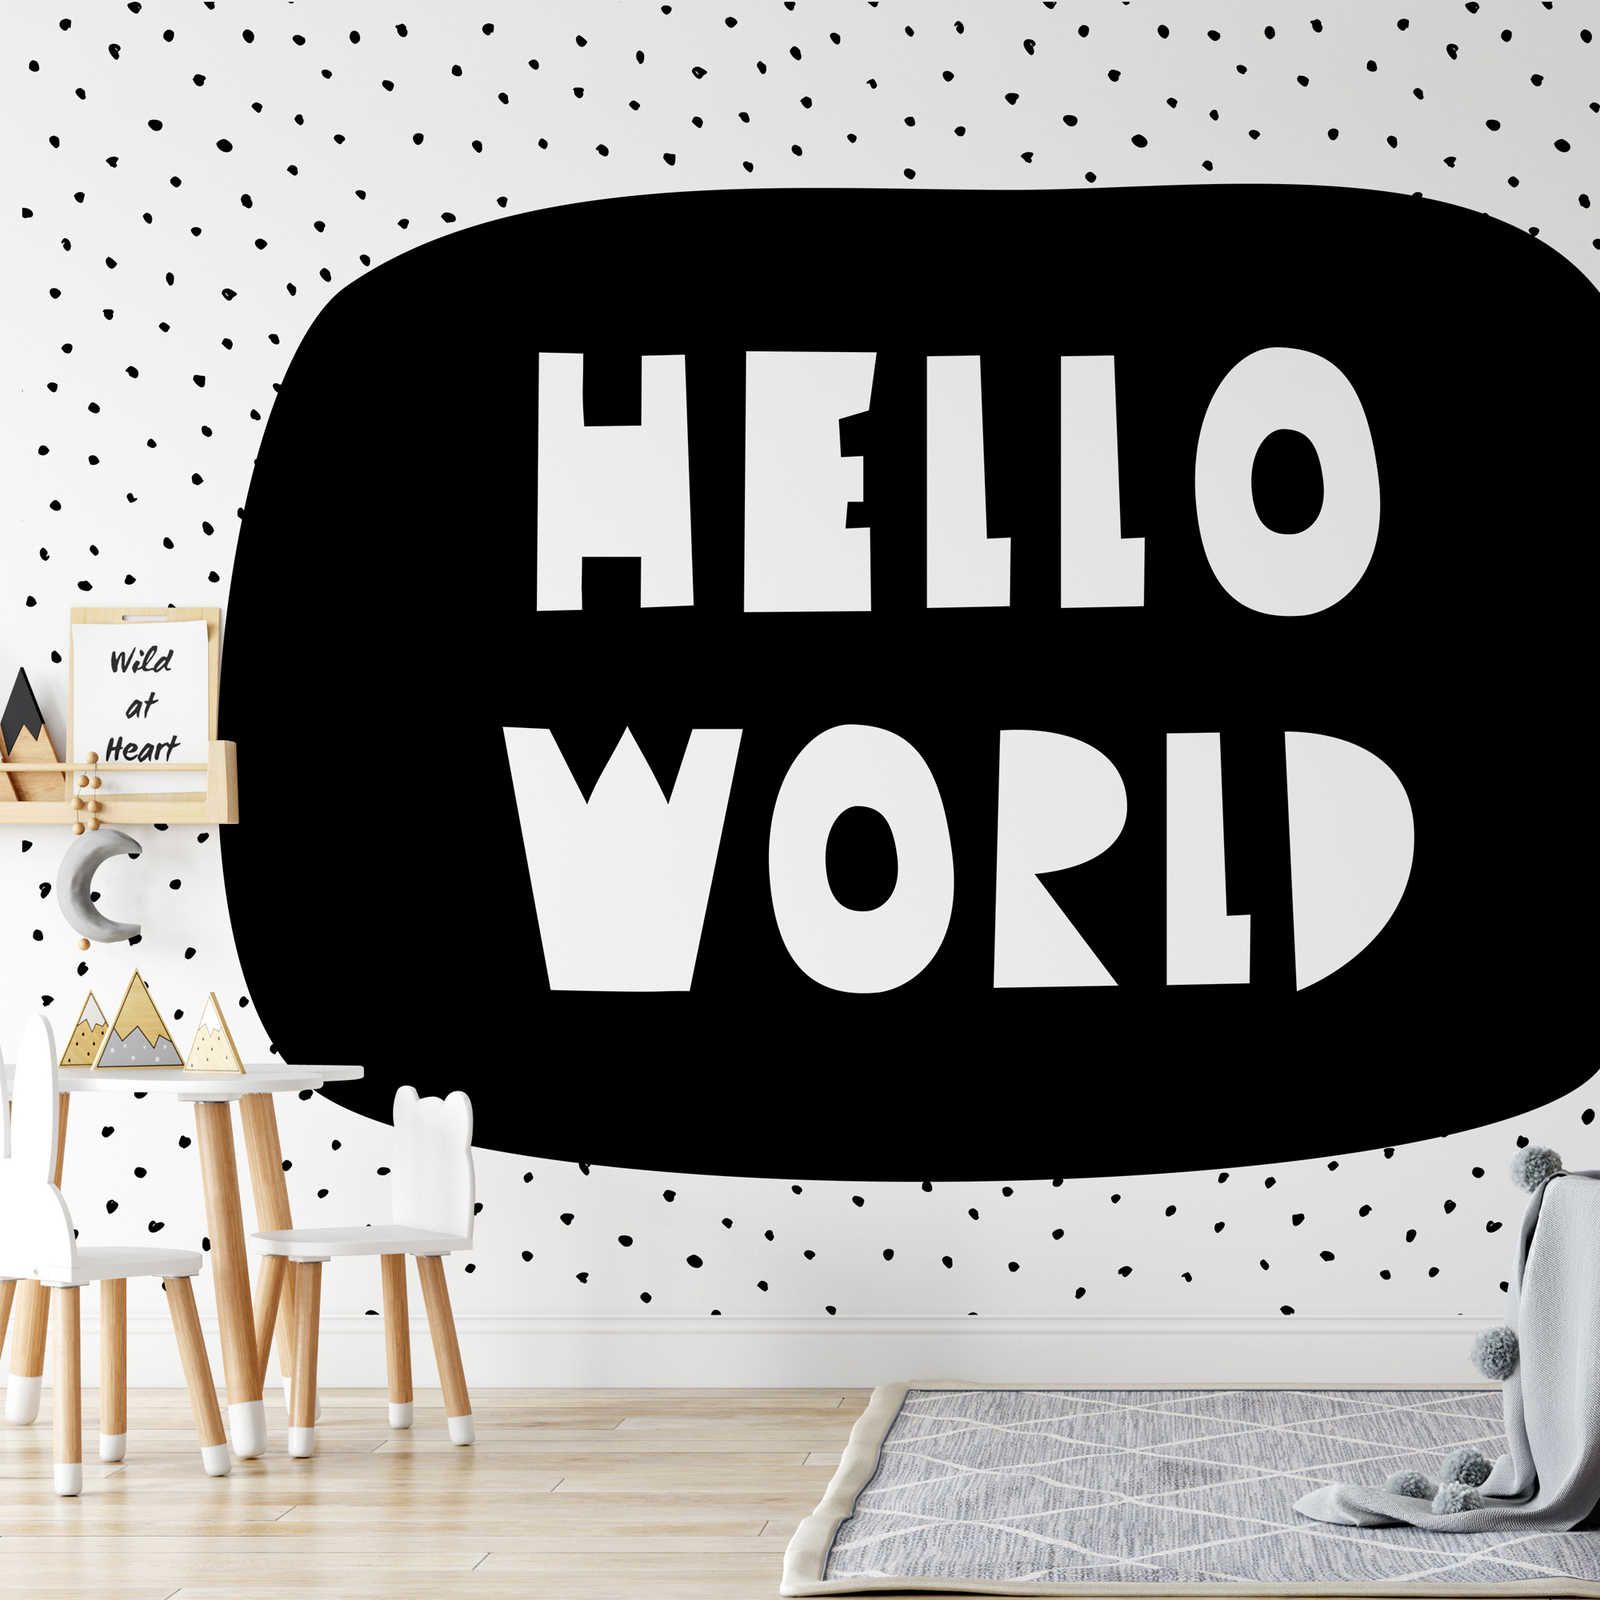 Photo wallpaper for children's room with lettering "Hello World" - Smooth & matt non-woven
